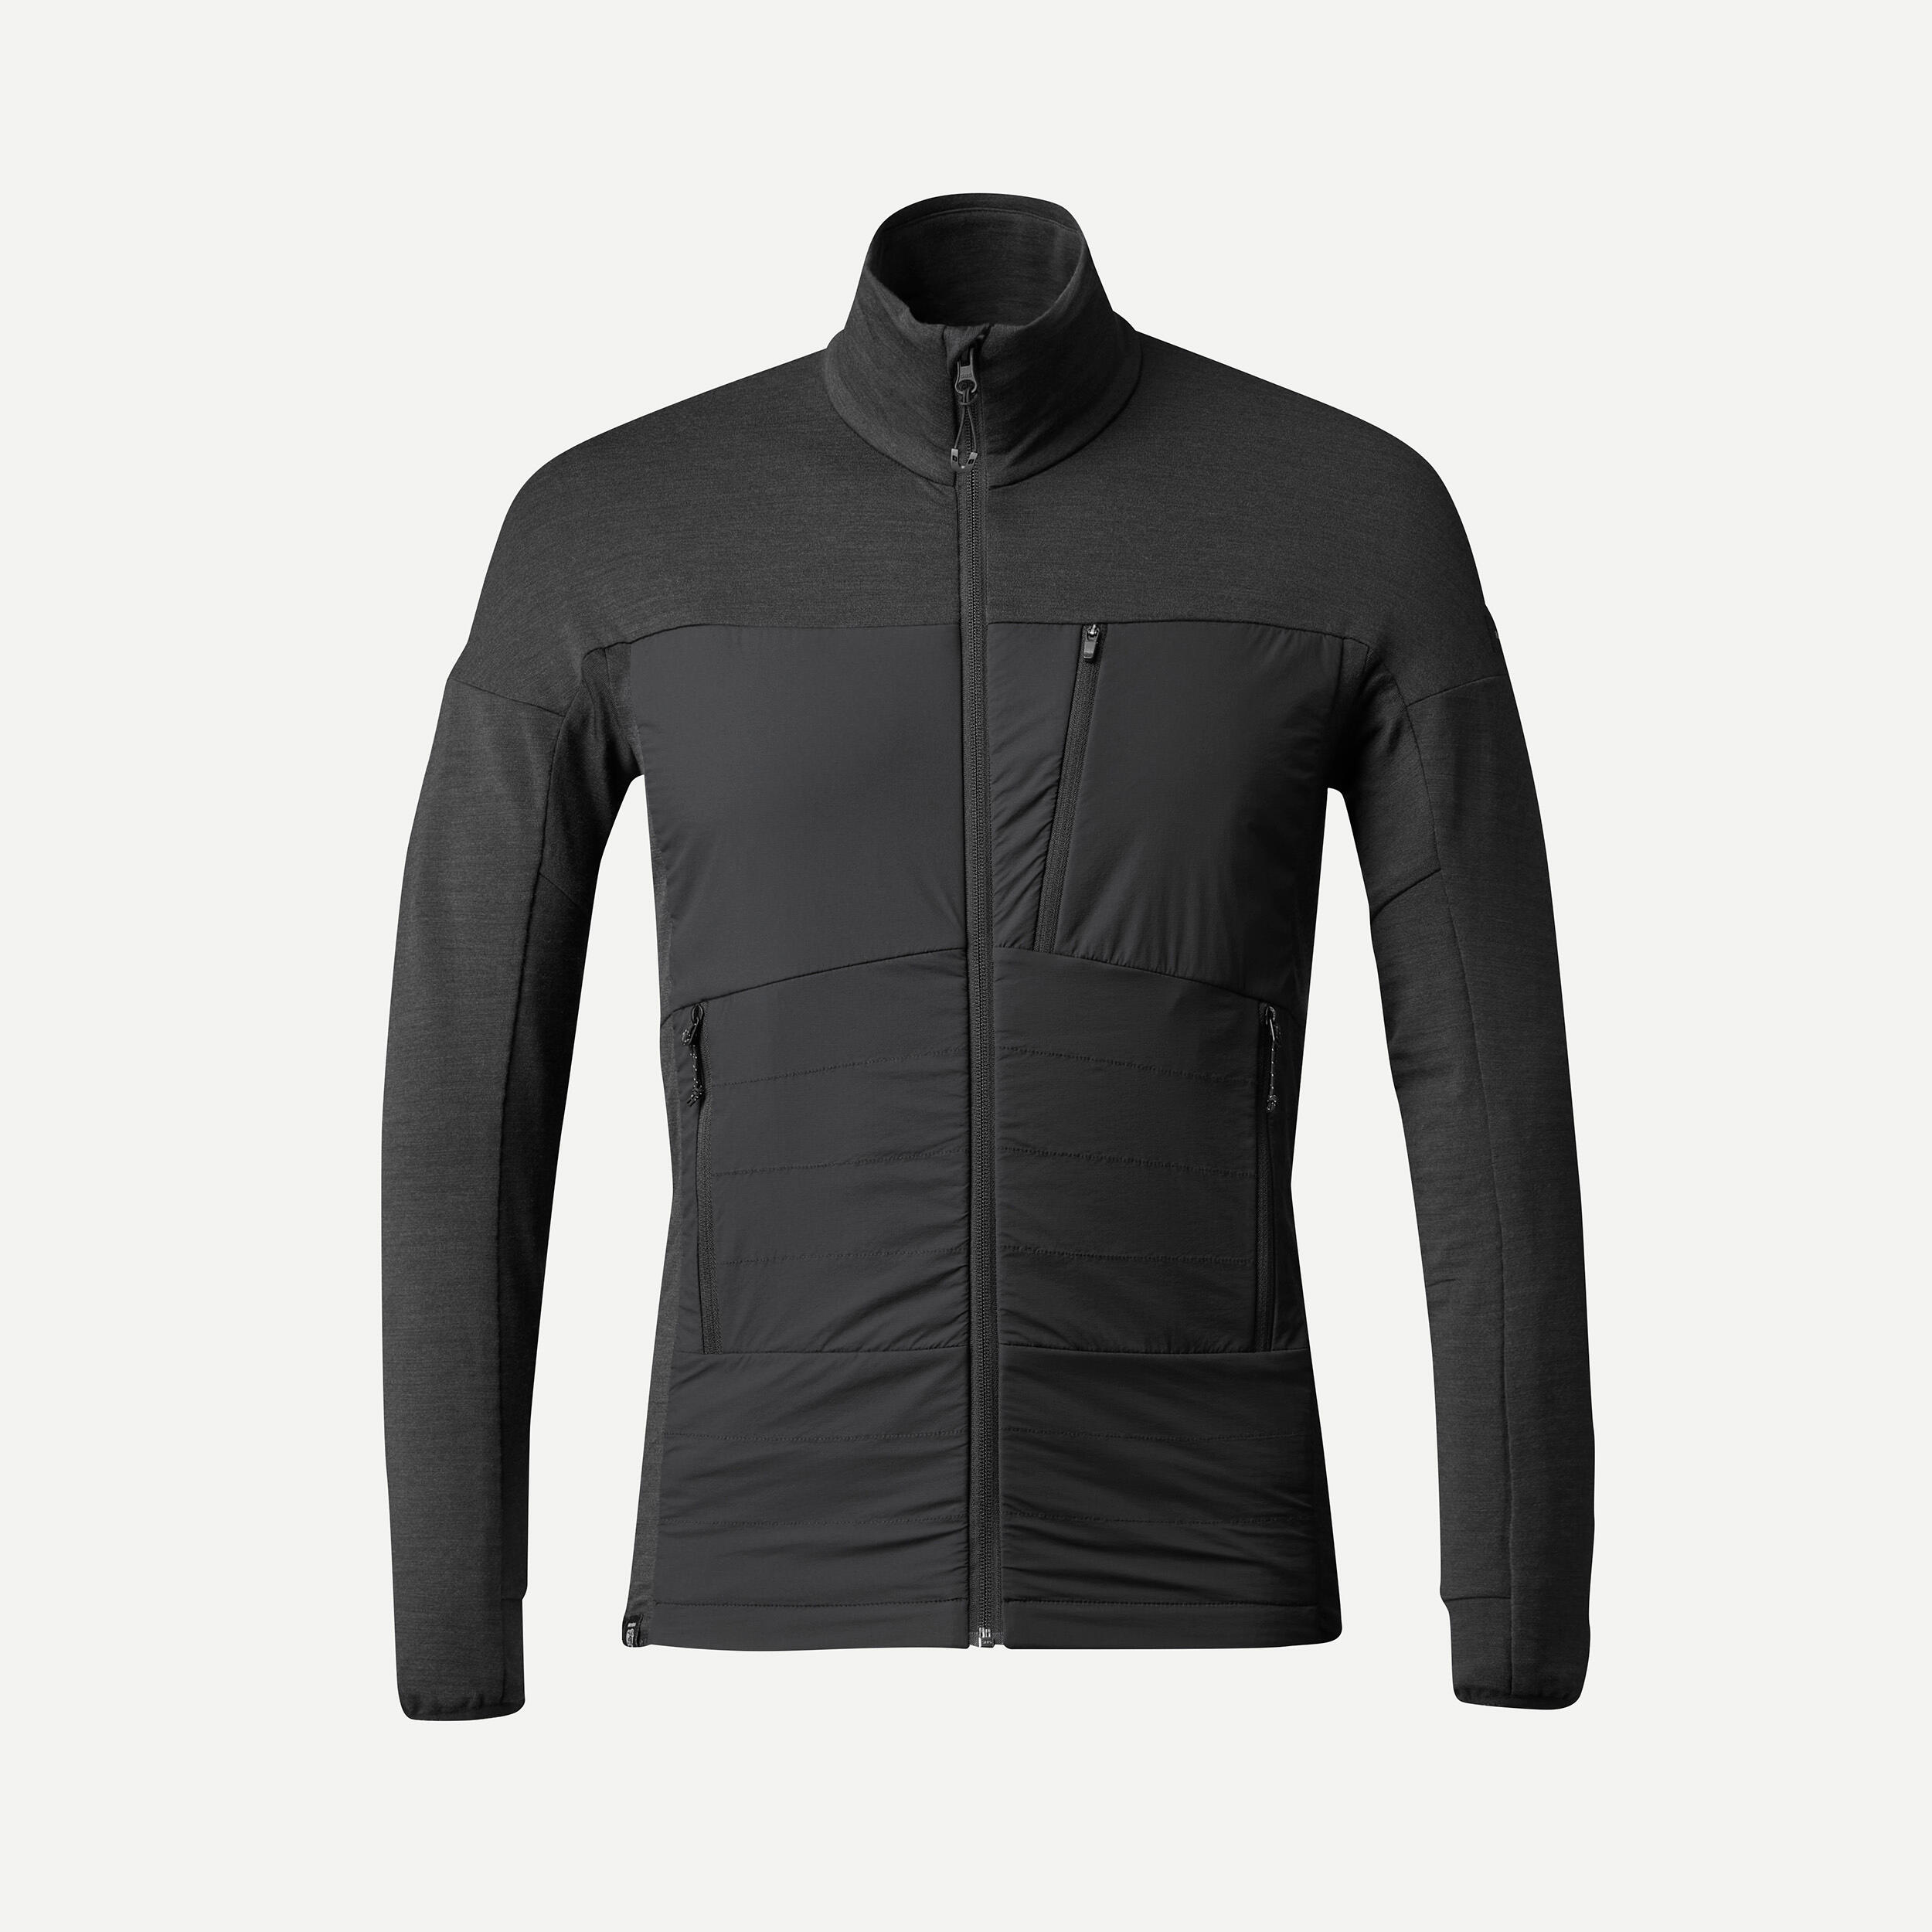 Buy Men's Waterproof Mountain Hiking Jacket MH500 Online | Decathlon